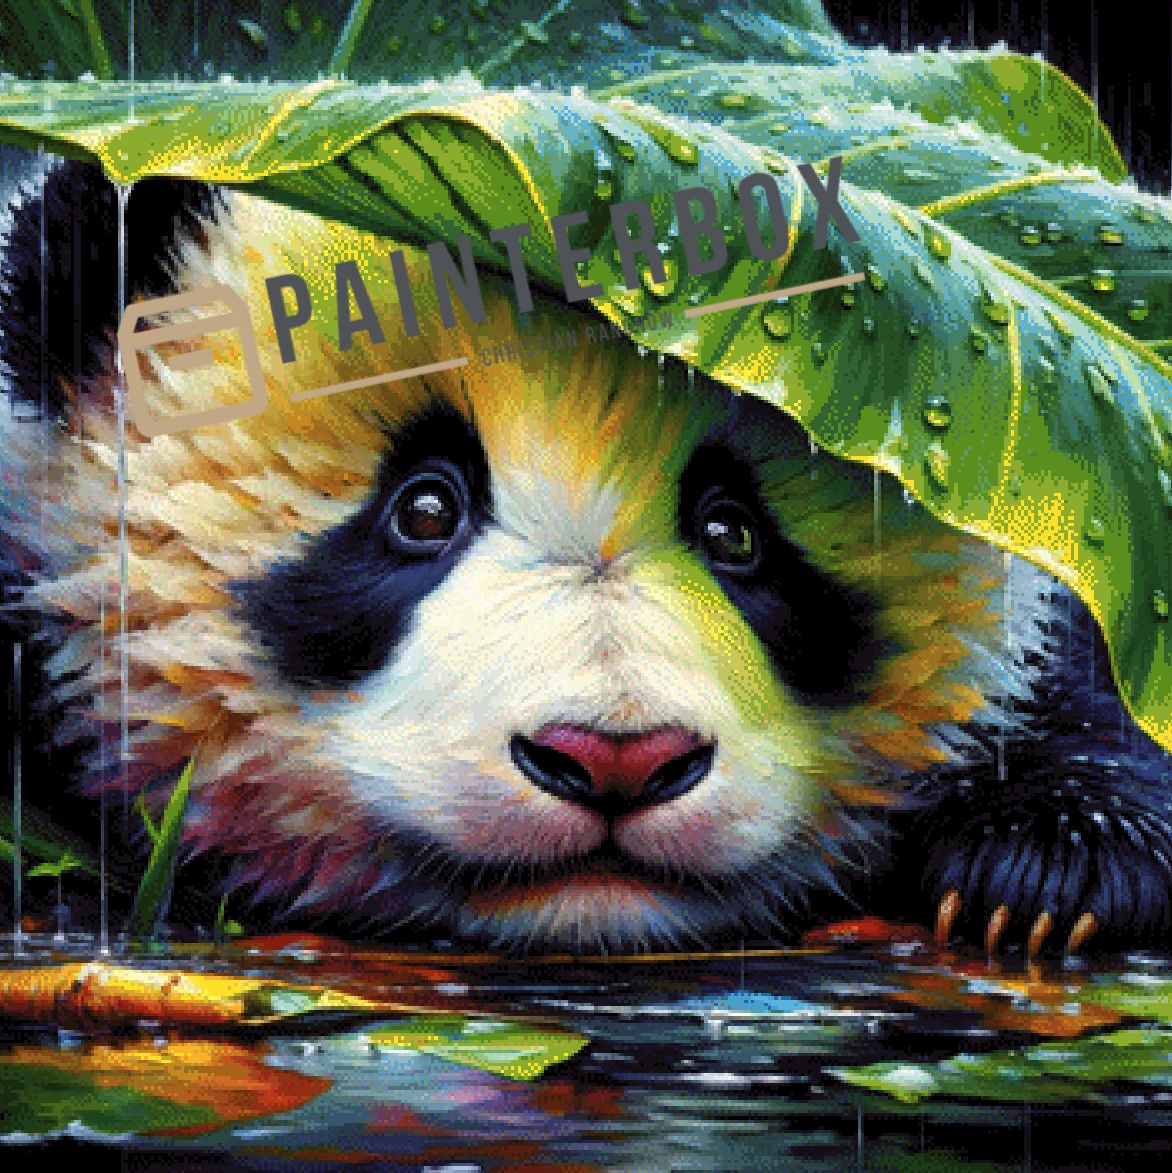 Panda in the Rain by CaroFelicia - 330 Farben eckig